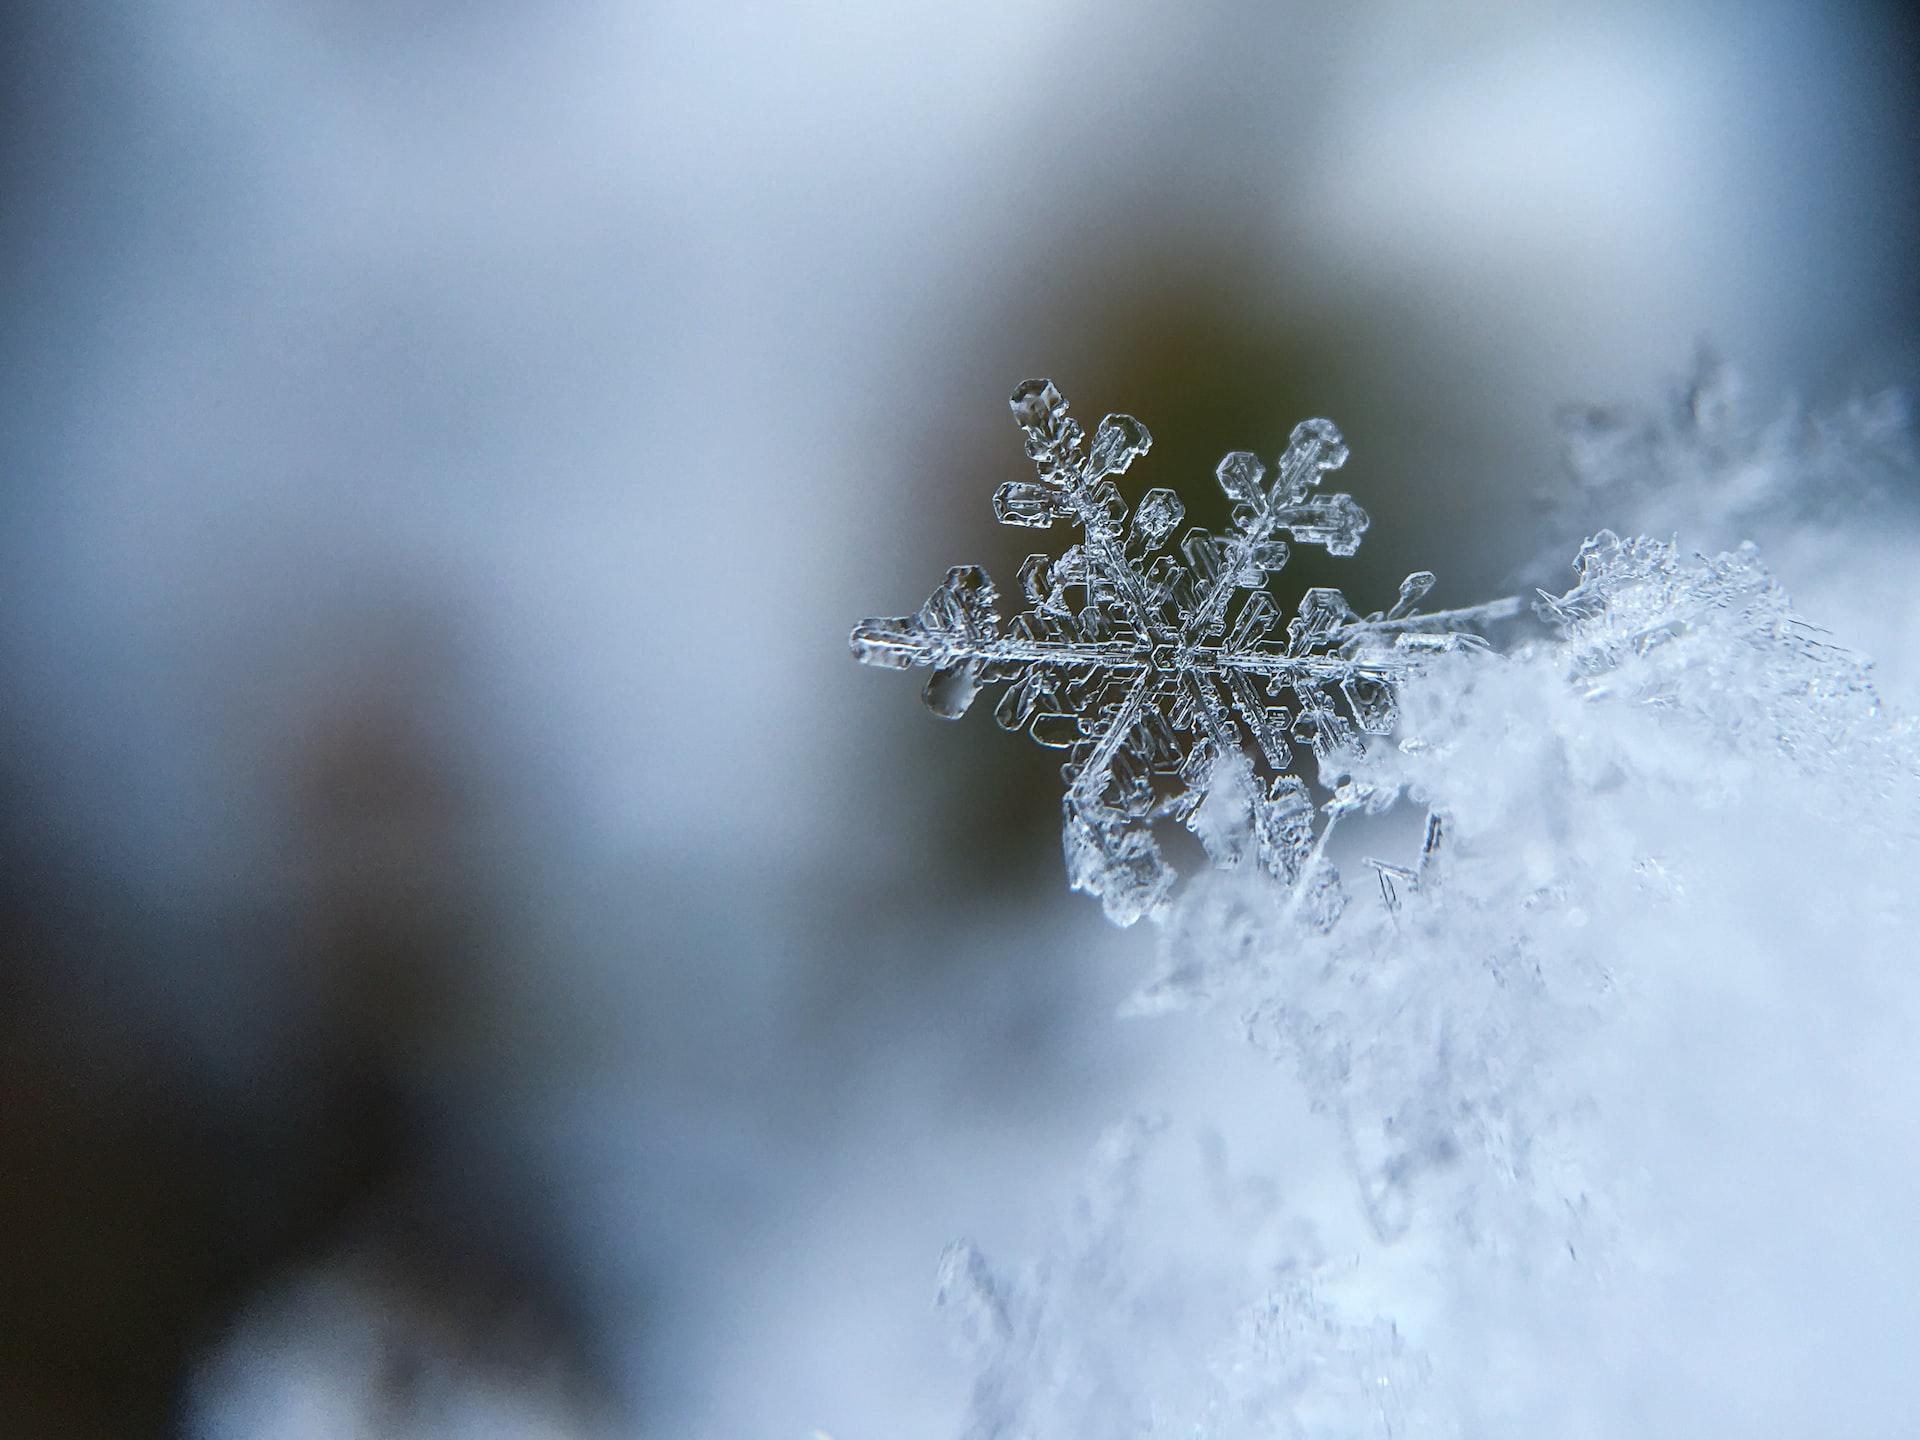 Macro shot of a snowflake, by Aaron Burden, via Unsplash